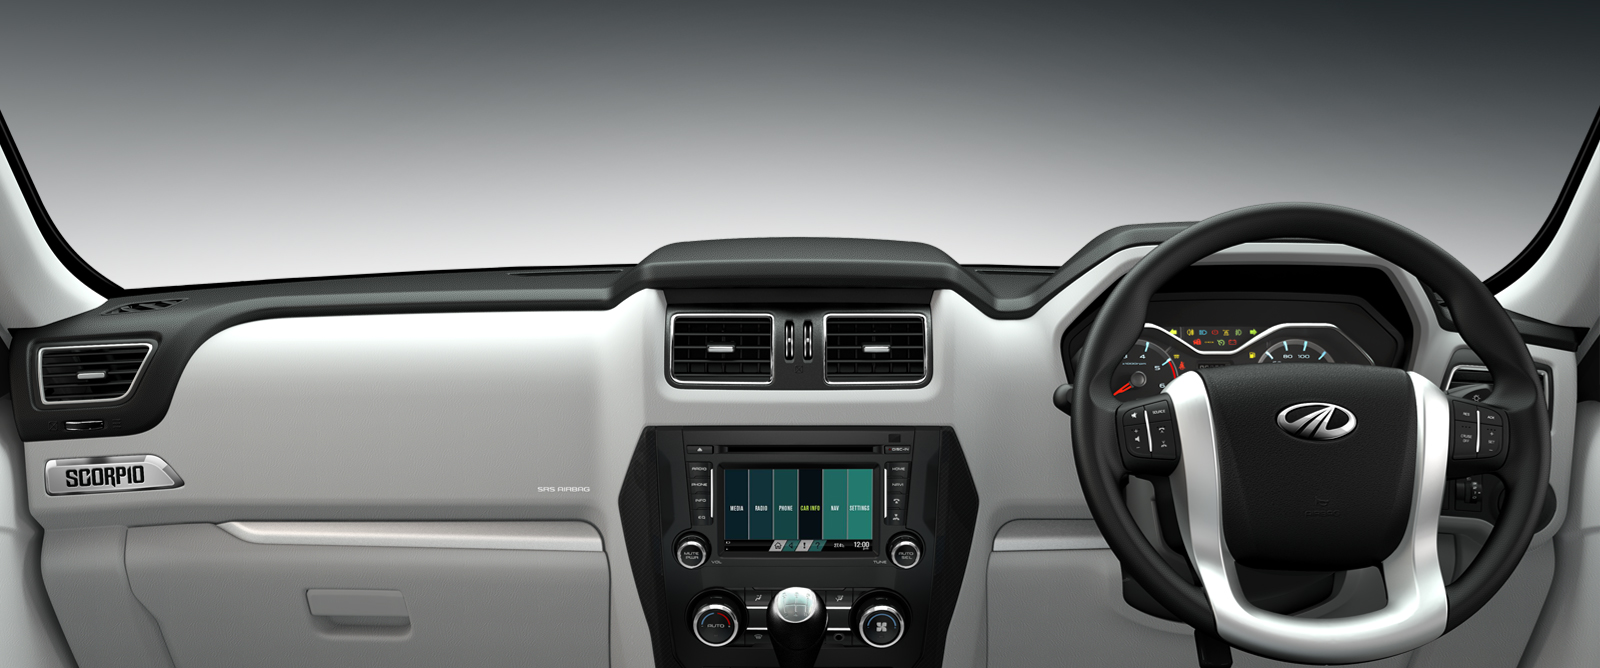 Mahindra Scorpio facelift Interior